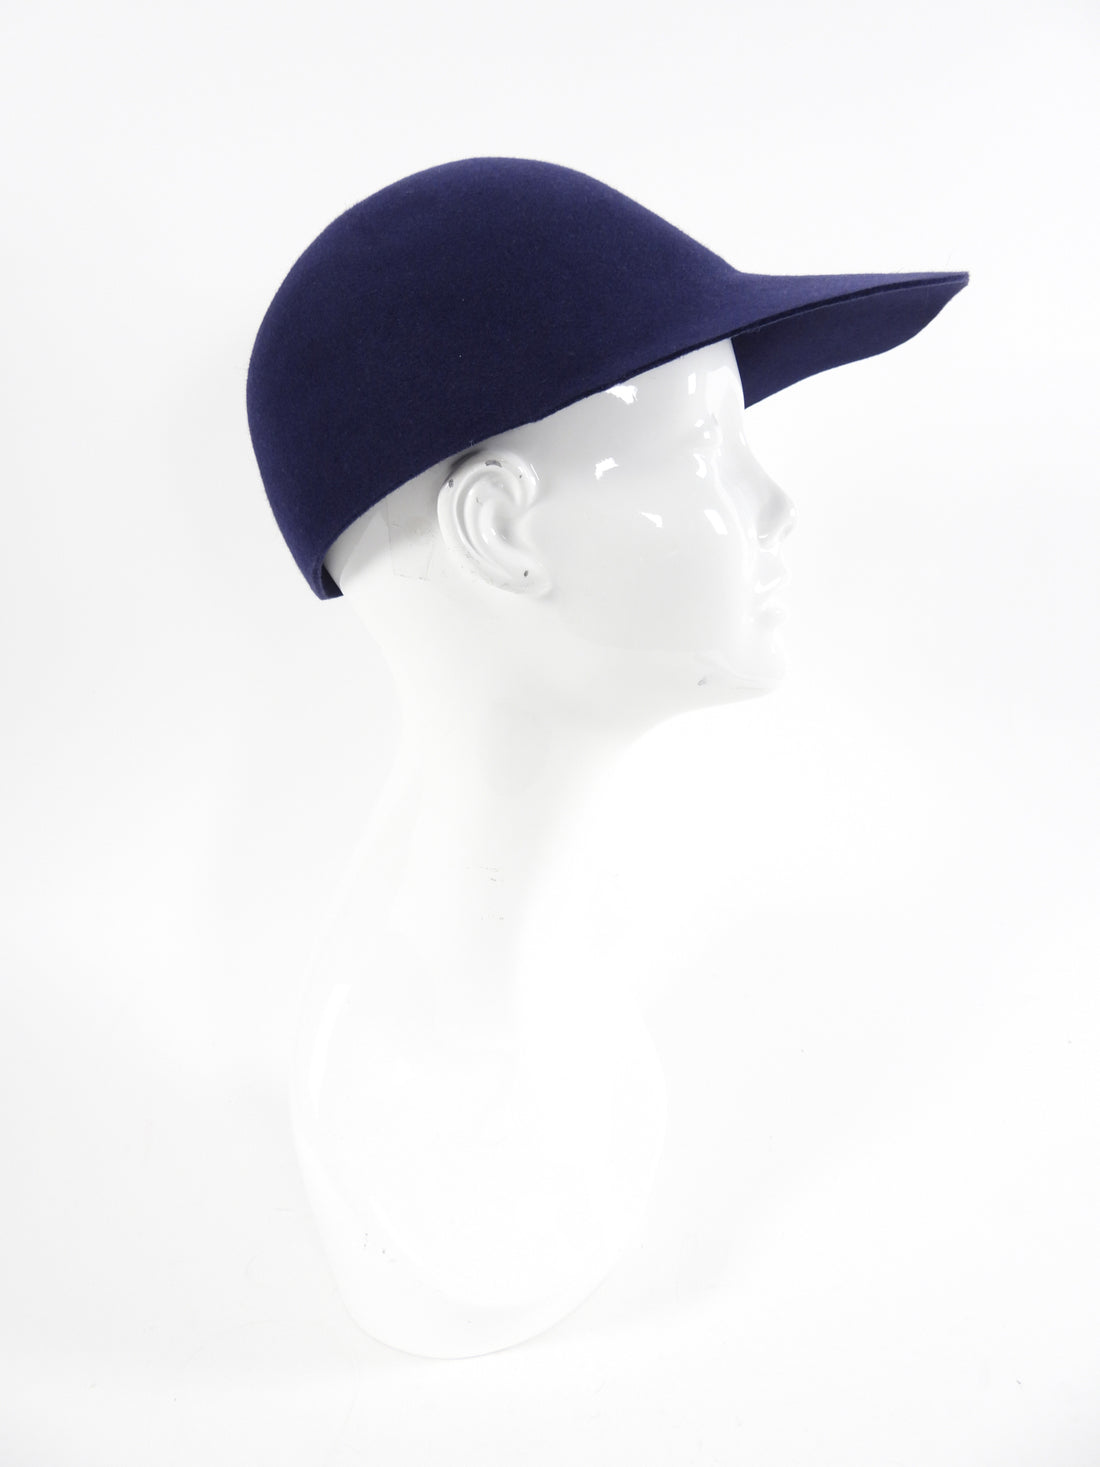 Lanvin Navy Felt Hat / Cap